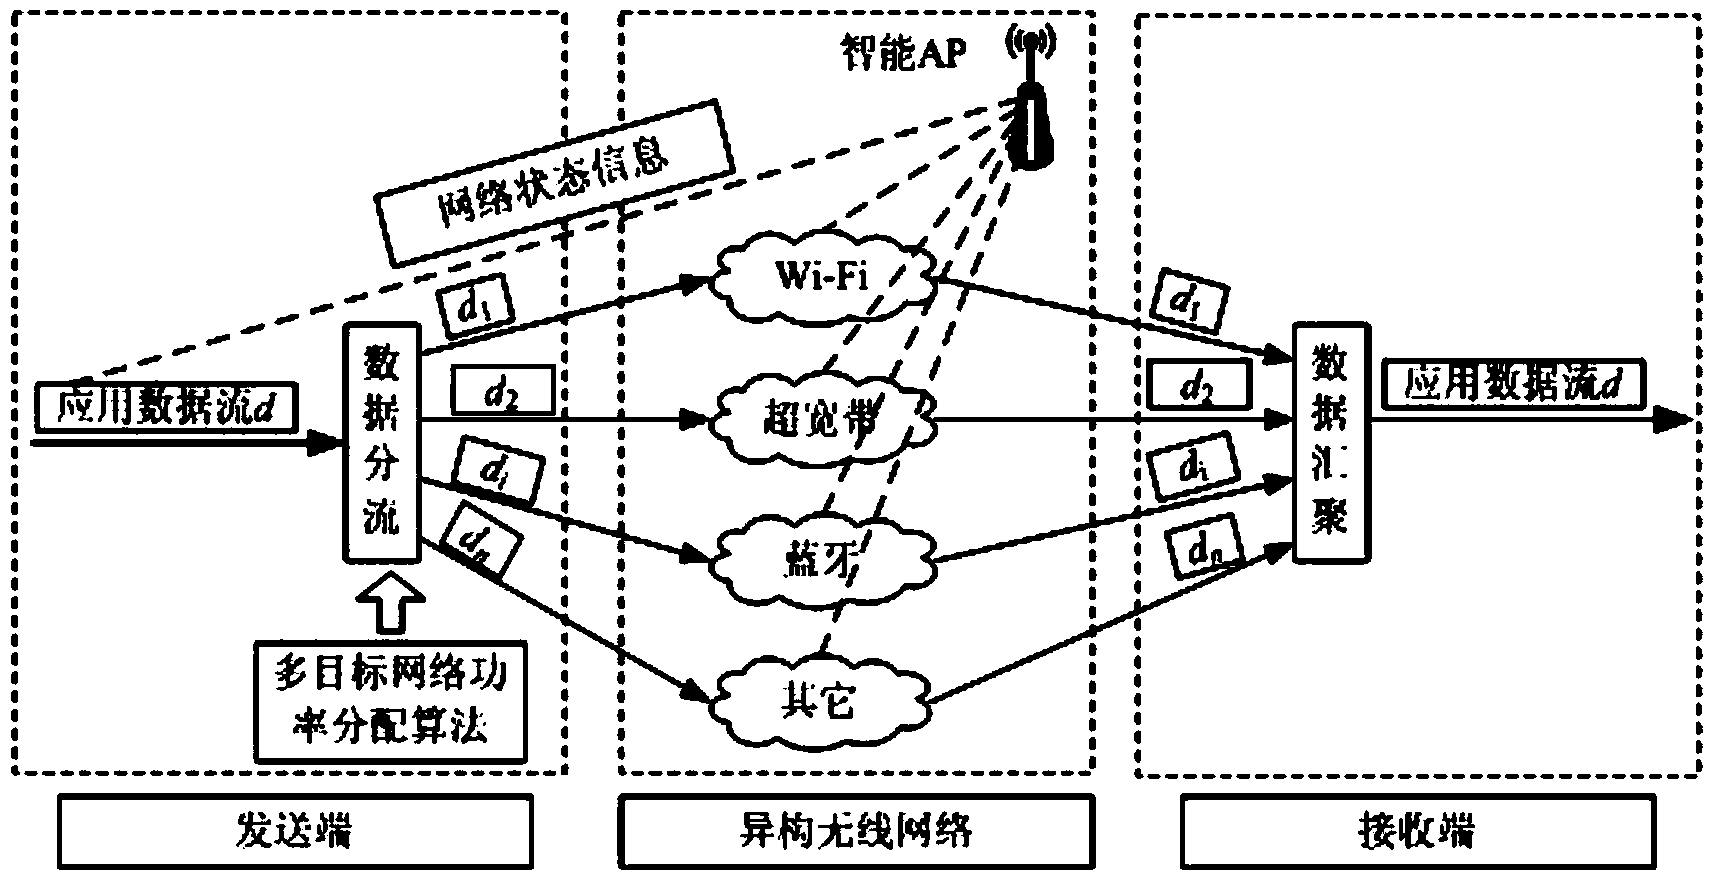 Multi-target-network power distribution method in heterogeneous wireless network cooperative communication